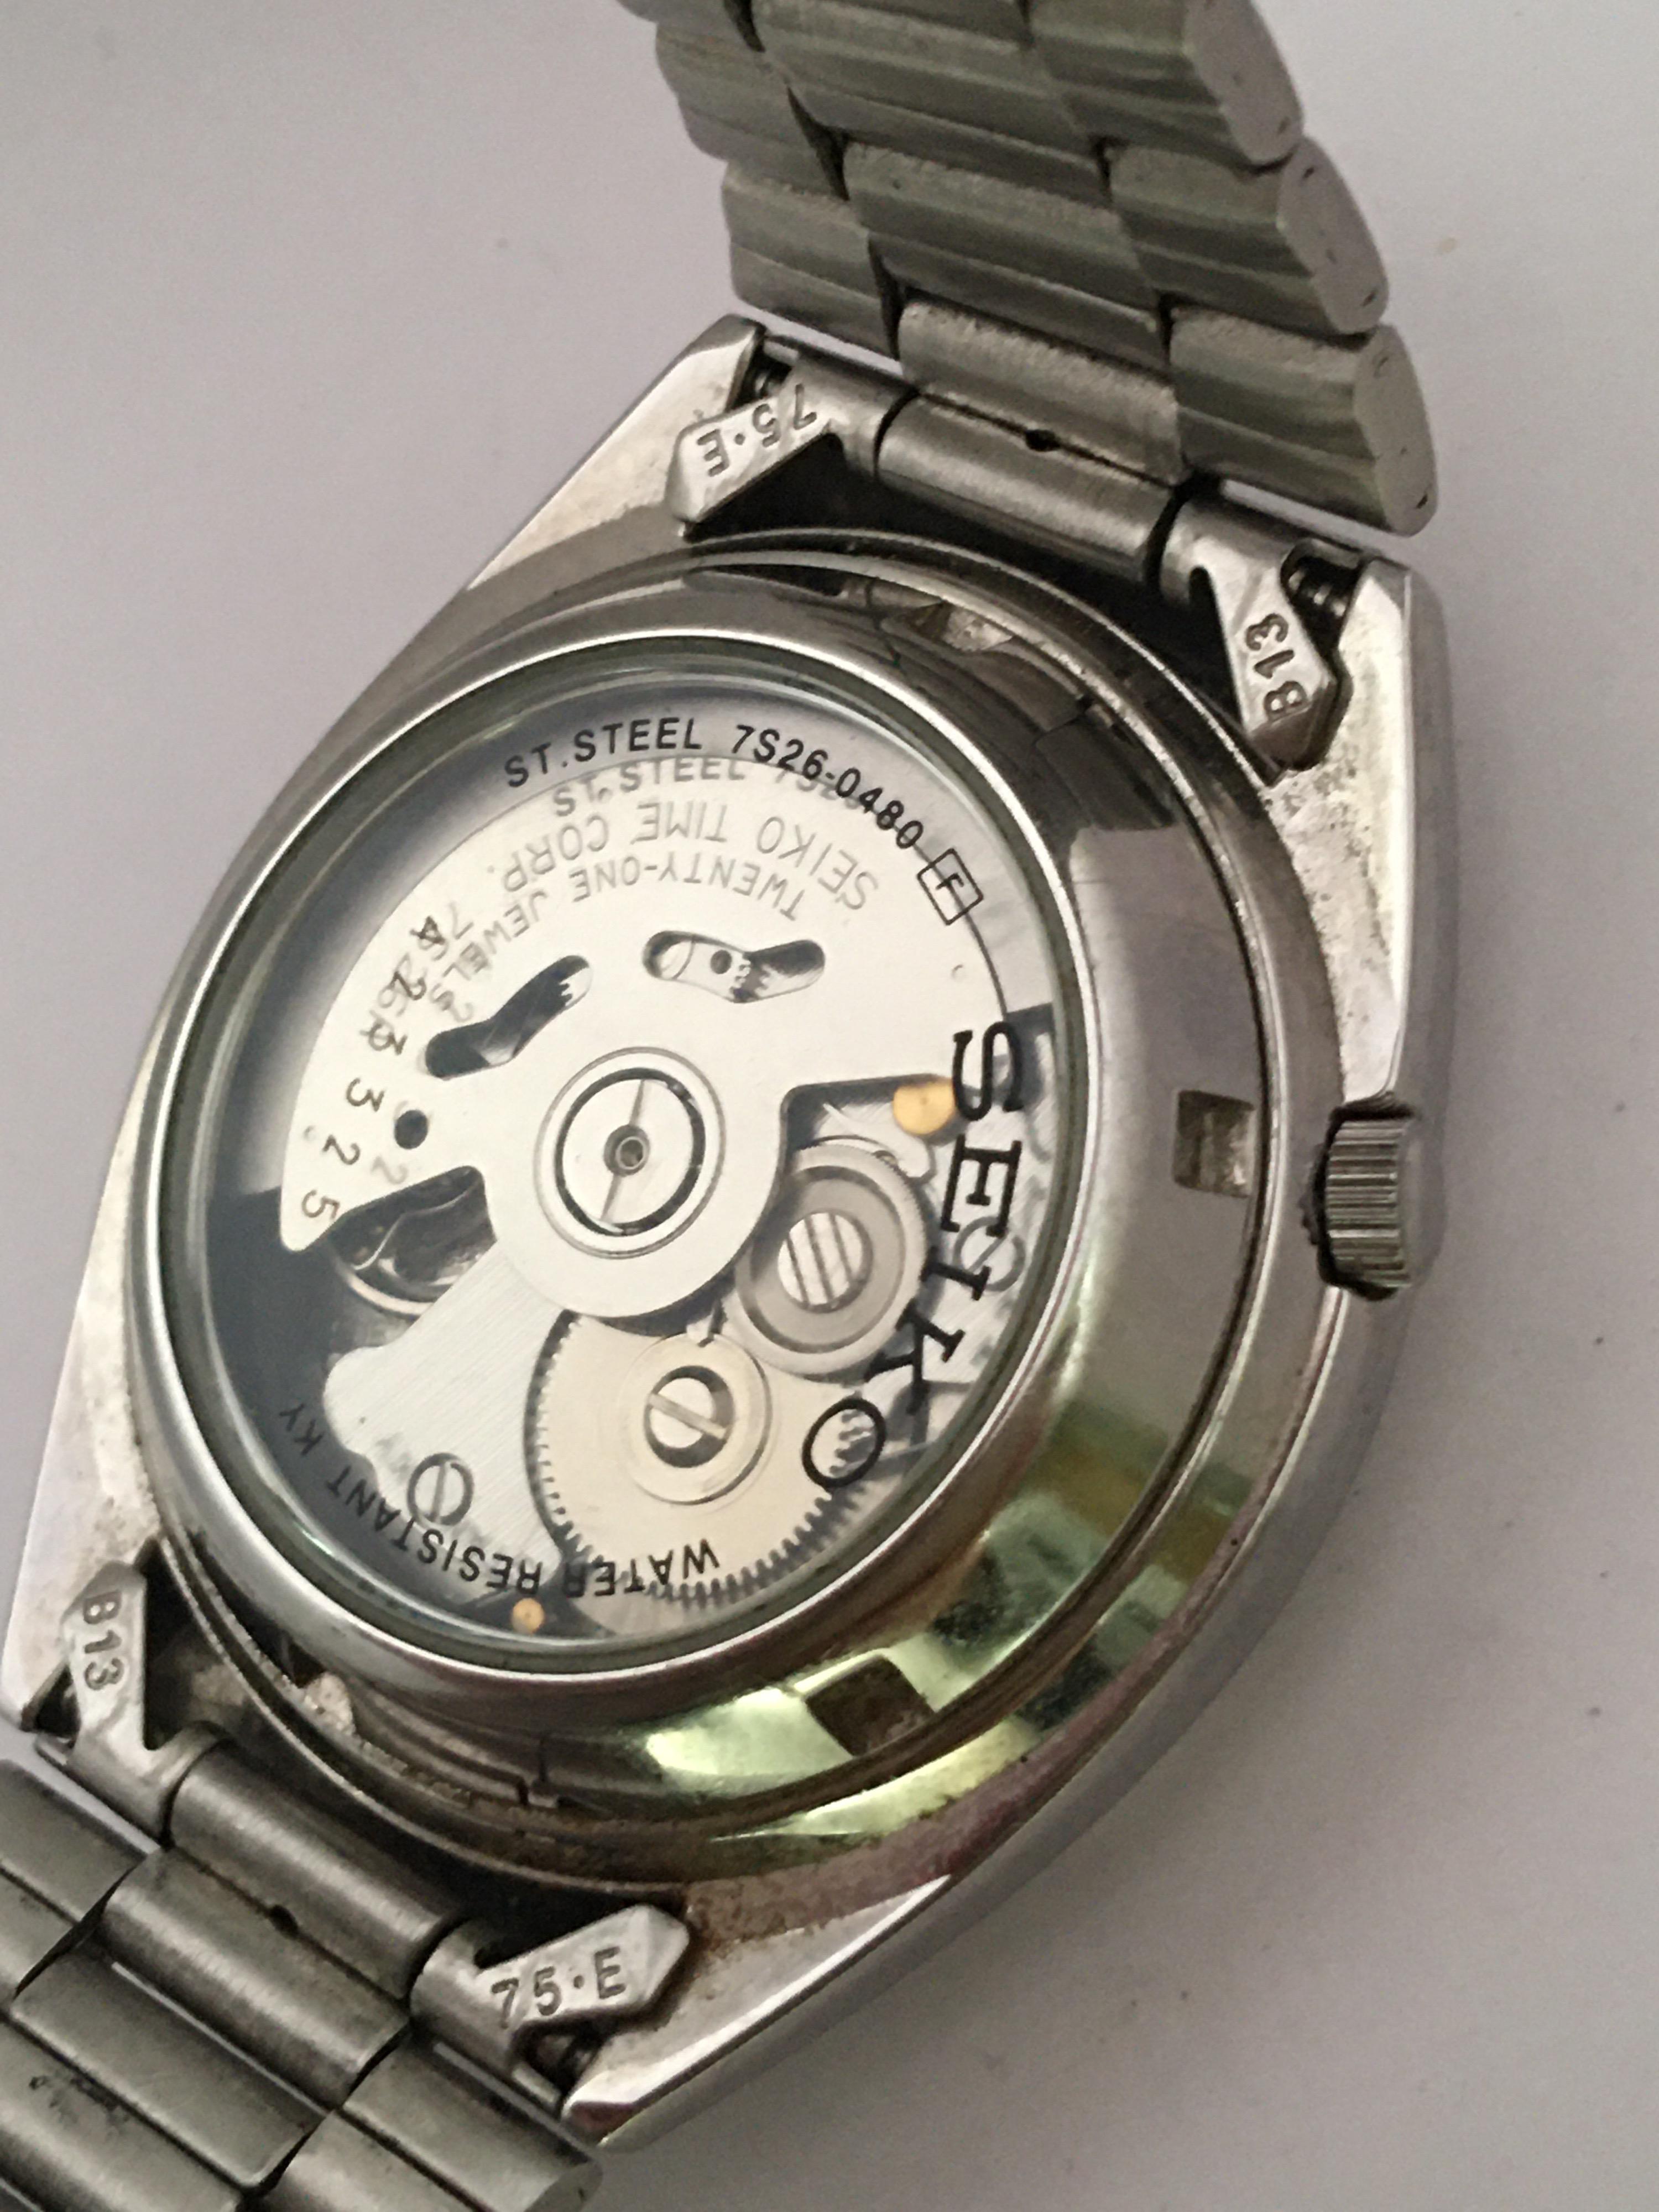 Stainless Steel Seiko 5 Automatic Gentlemen's Watch 5